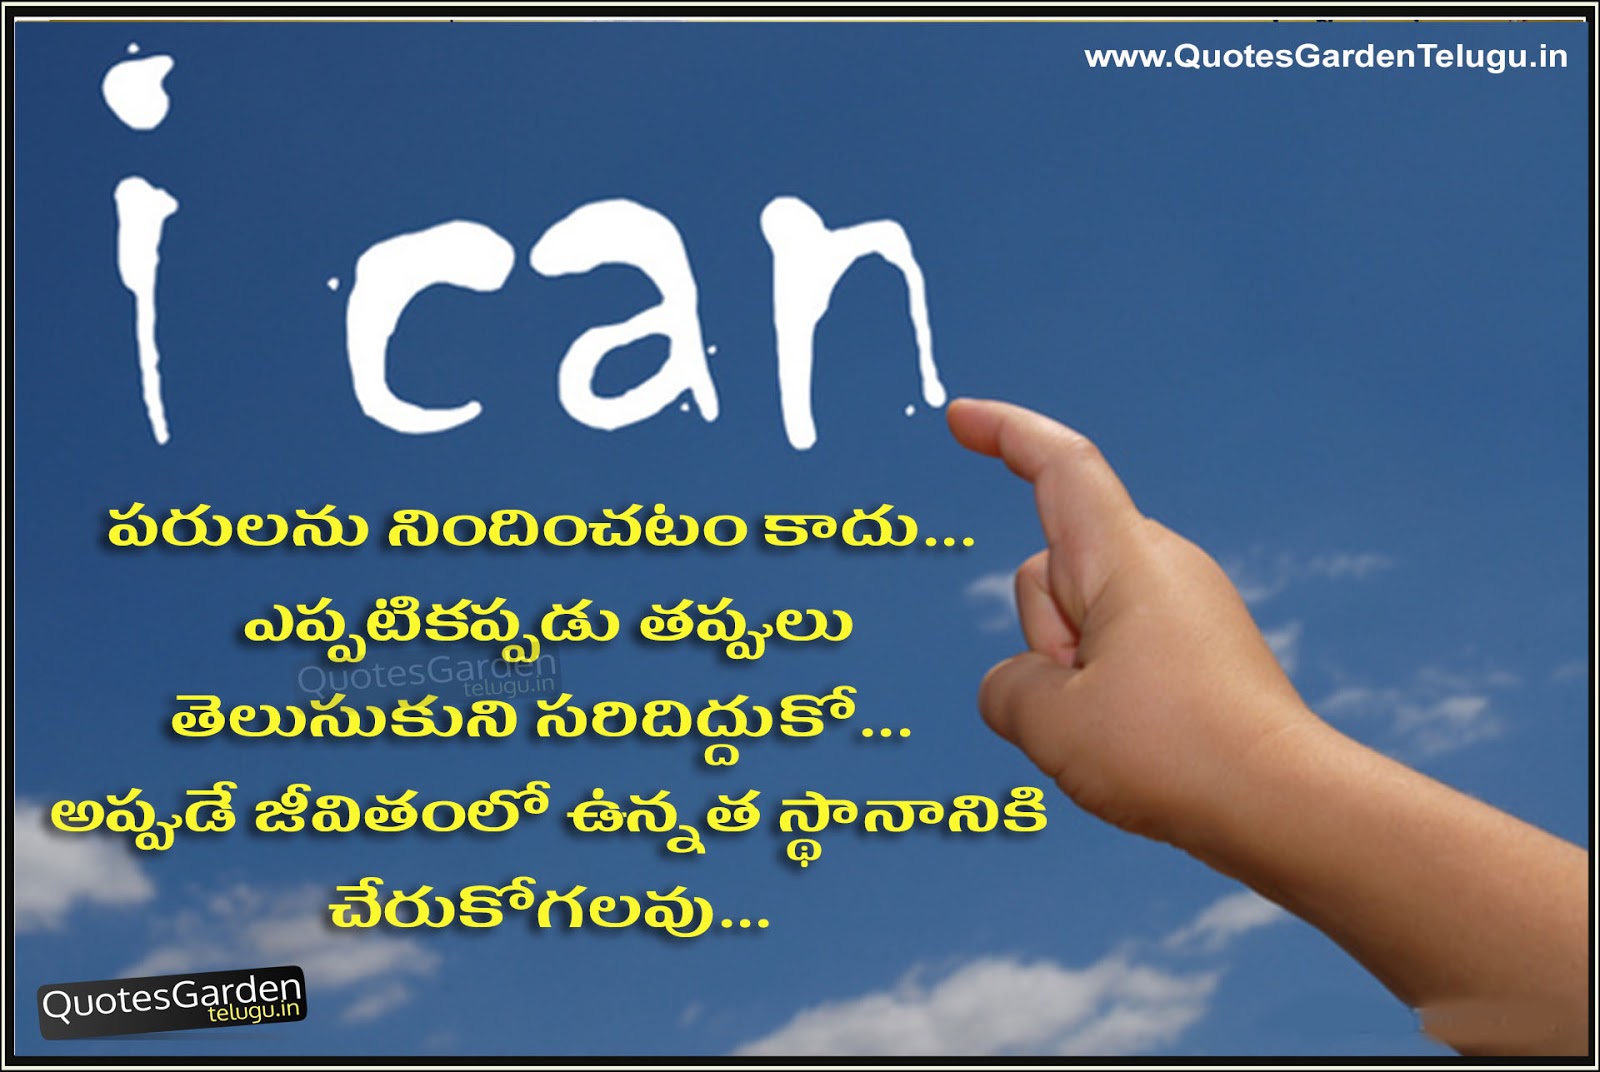 Self Attitude Quotes with good morning telugu quotes | QUOTES ...